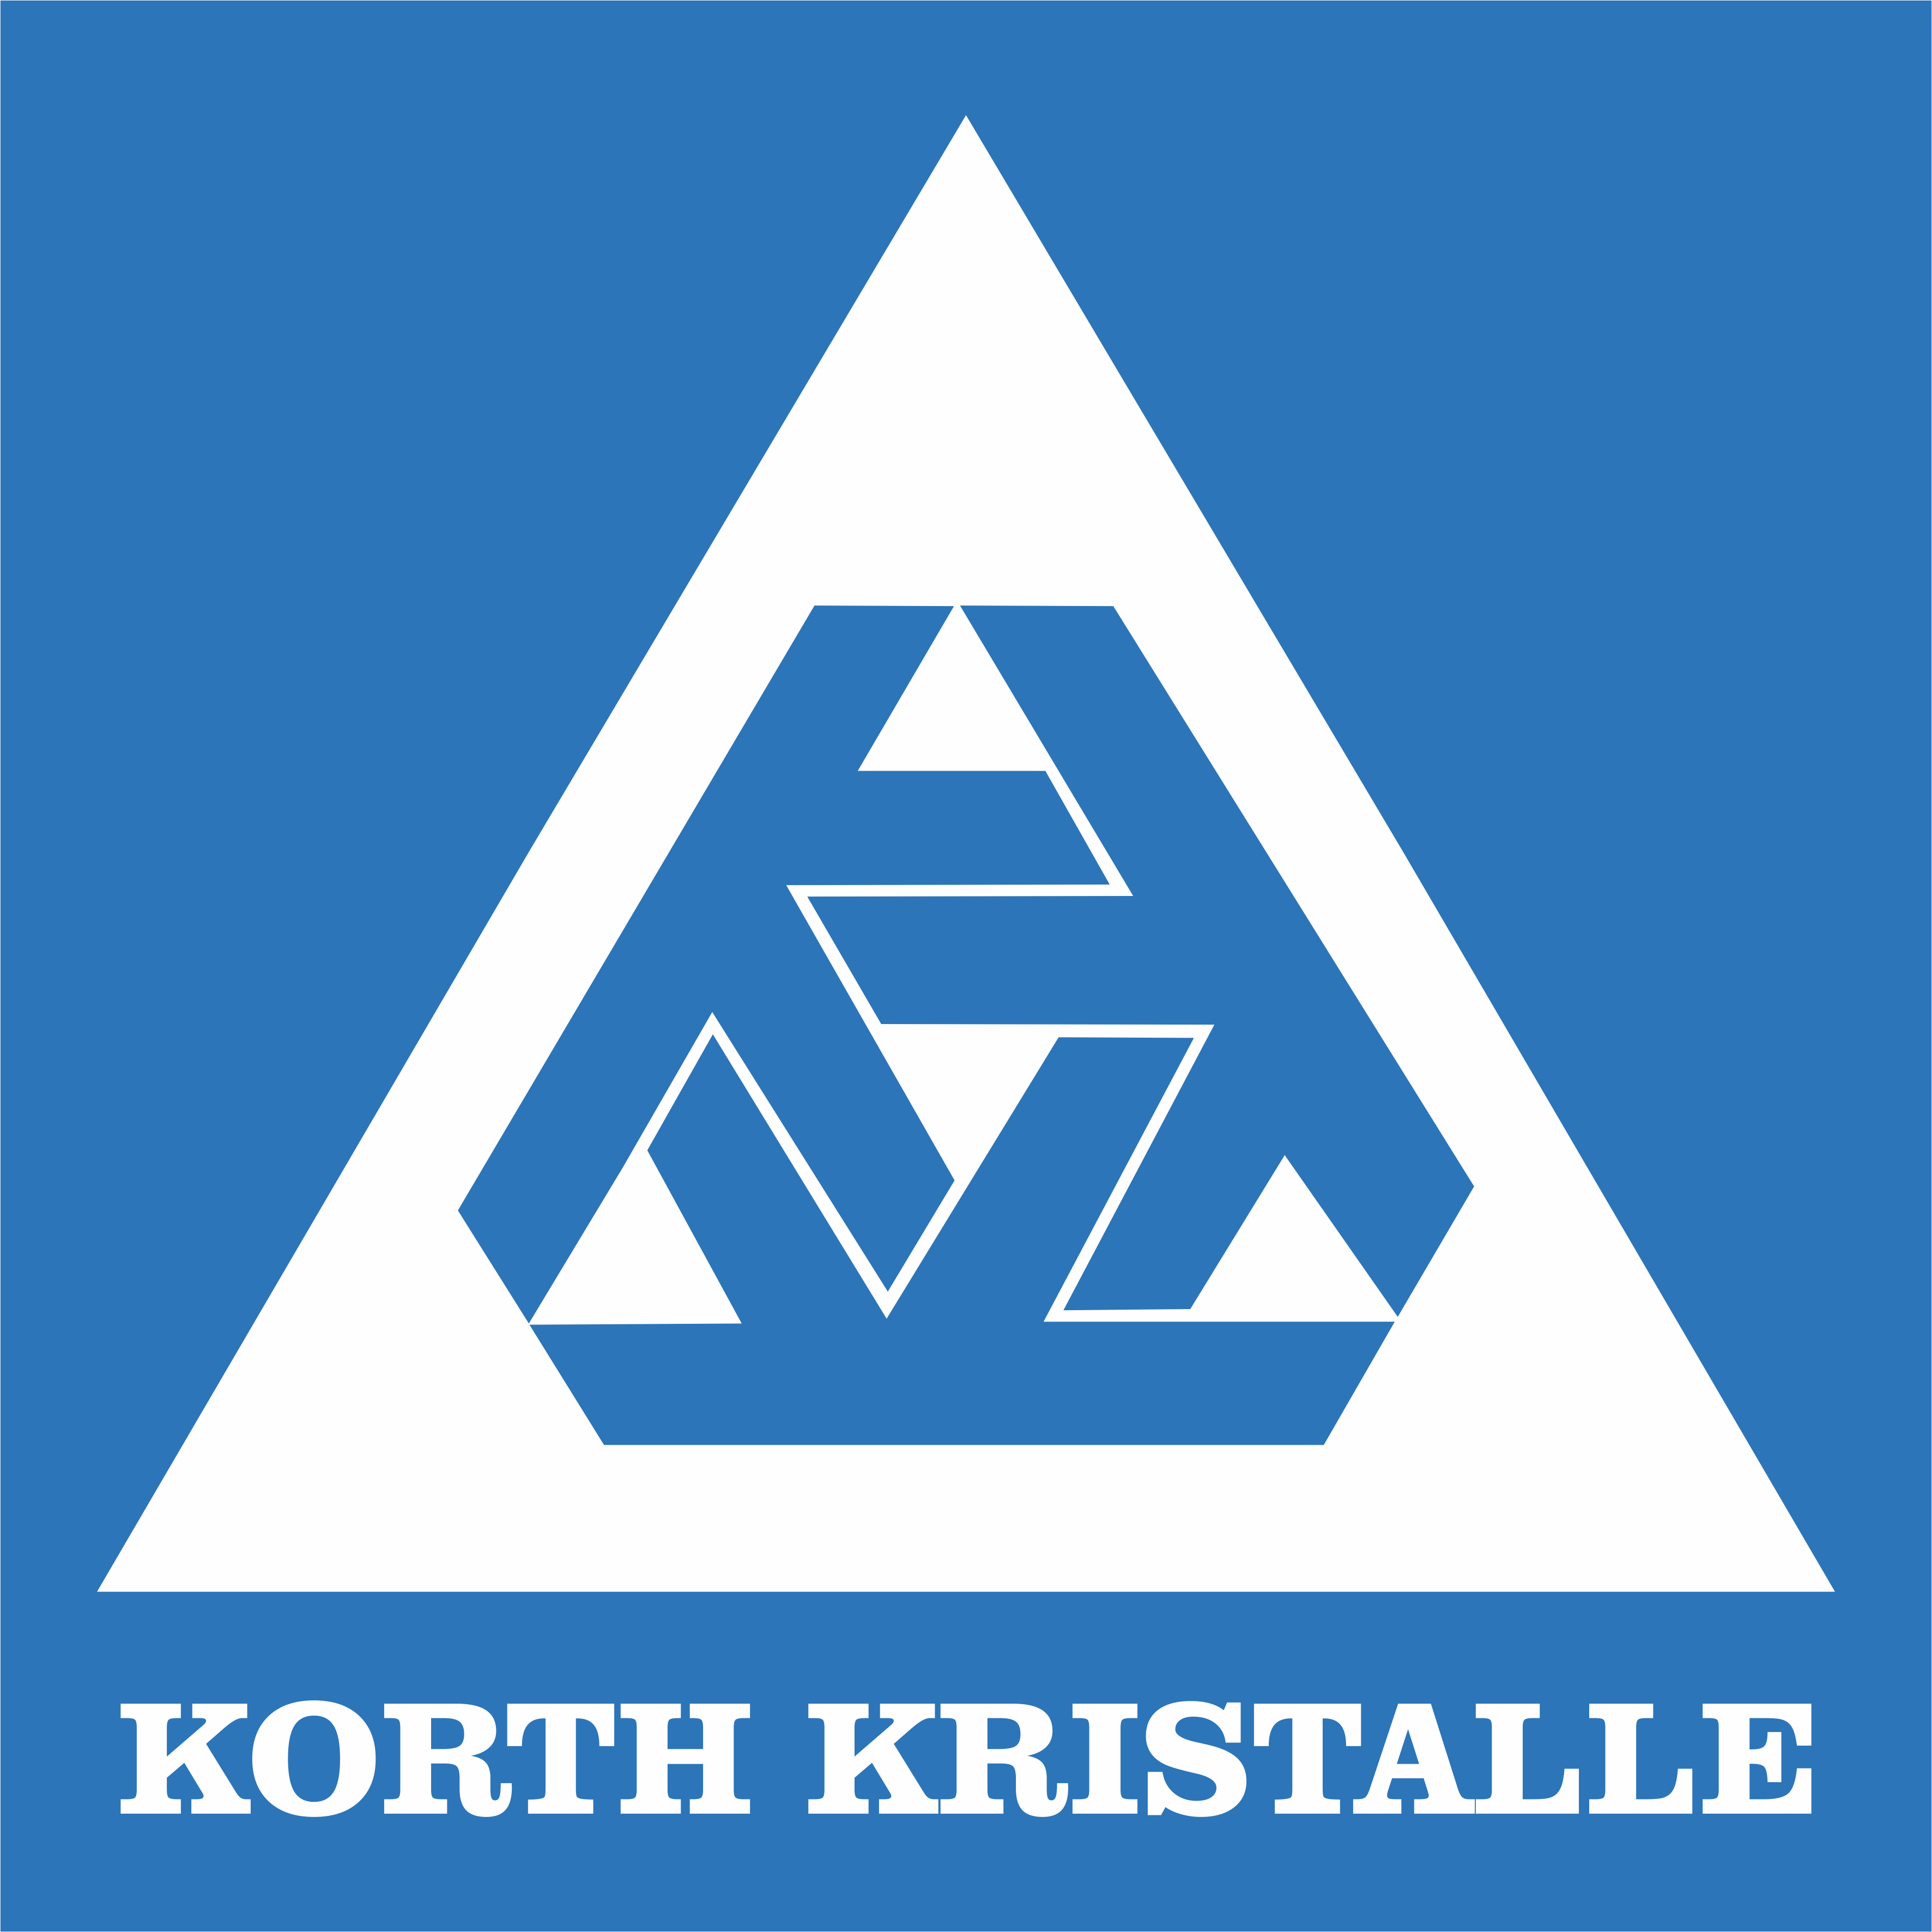 Korth Kristalle GmbH